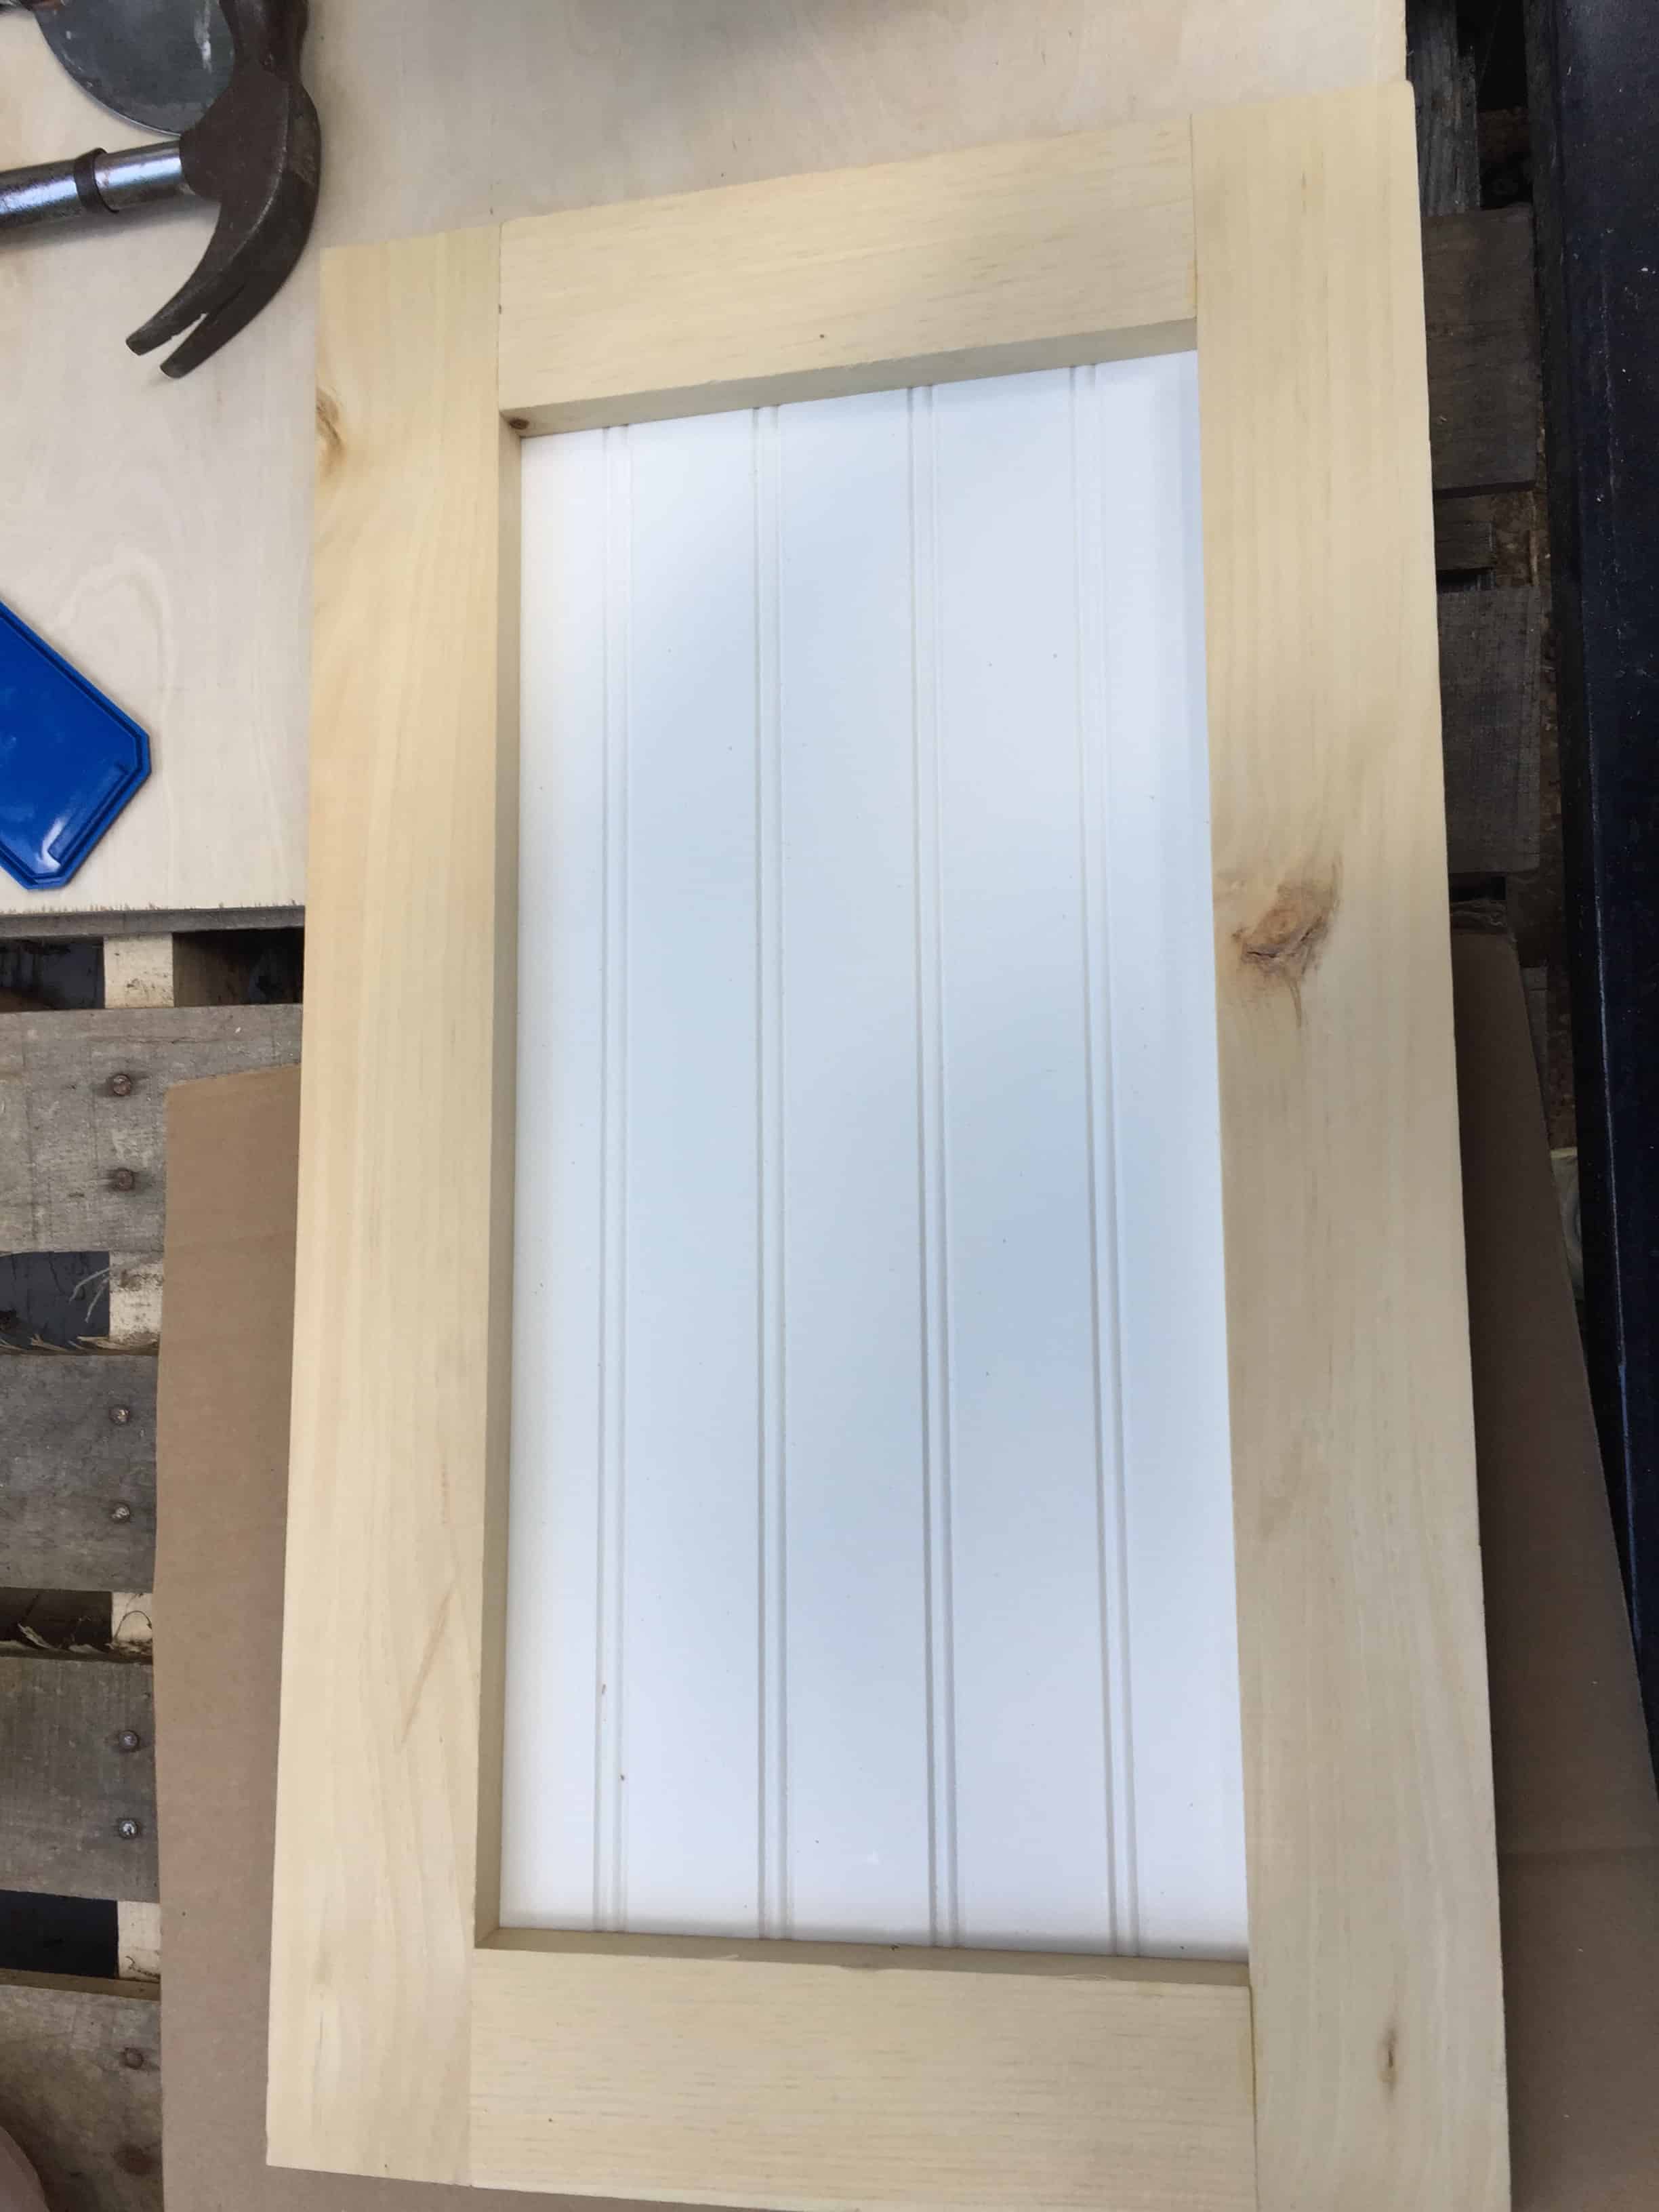 Saved by Scottie rv remodel storage cabinet build door before paint